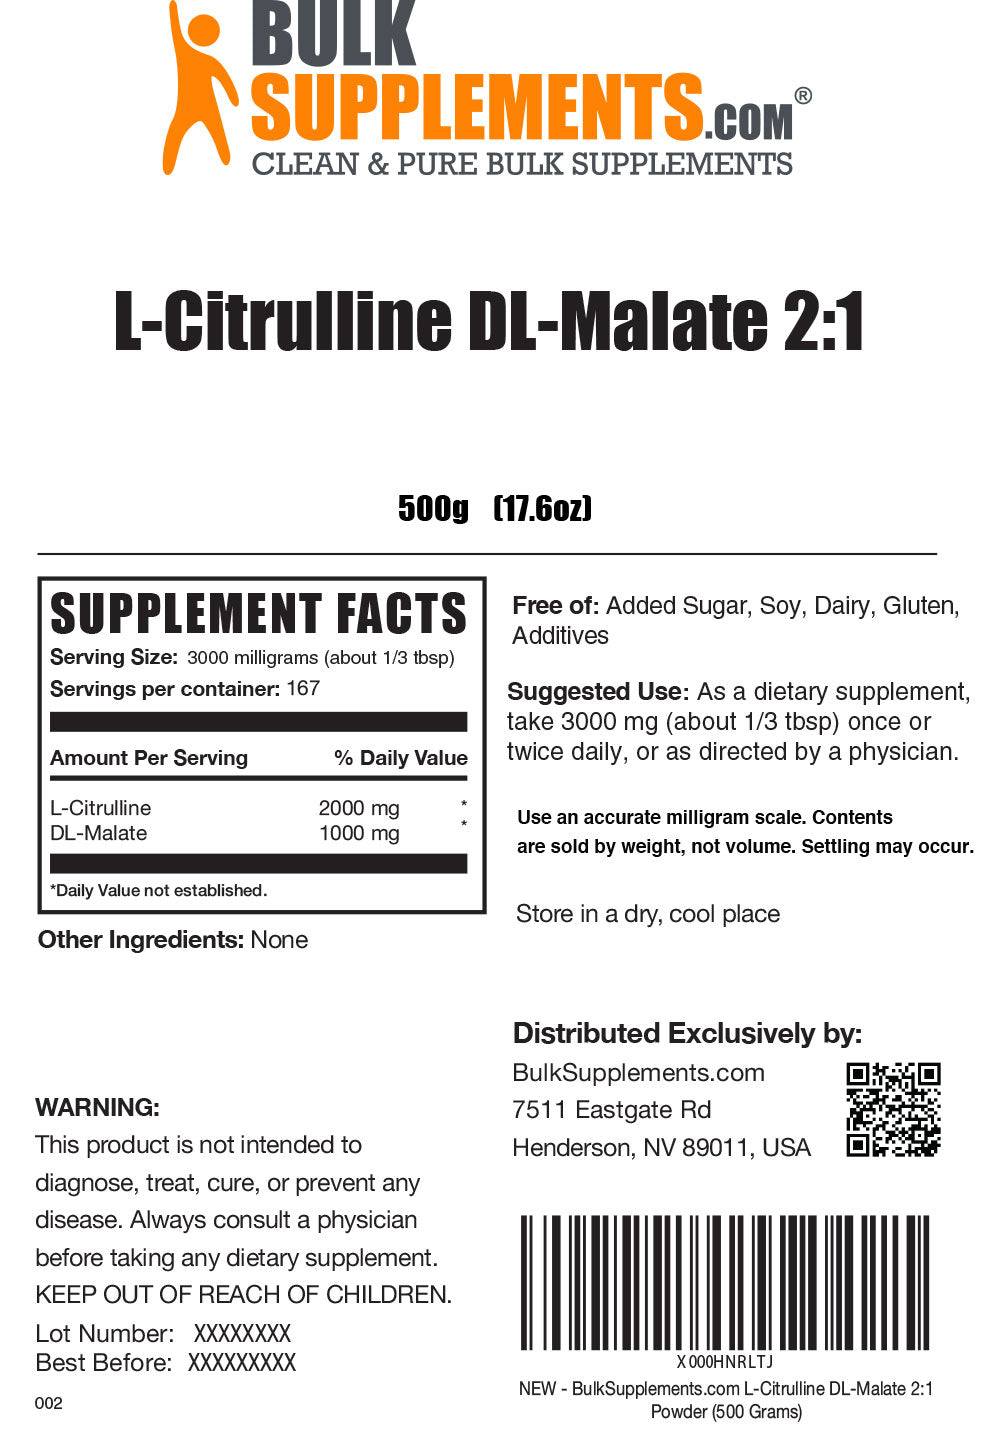 L-citrulline dl-malate 2:1 powder label 500g